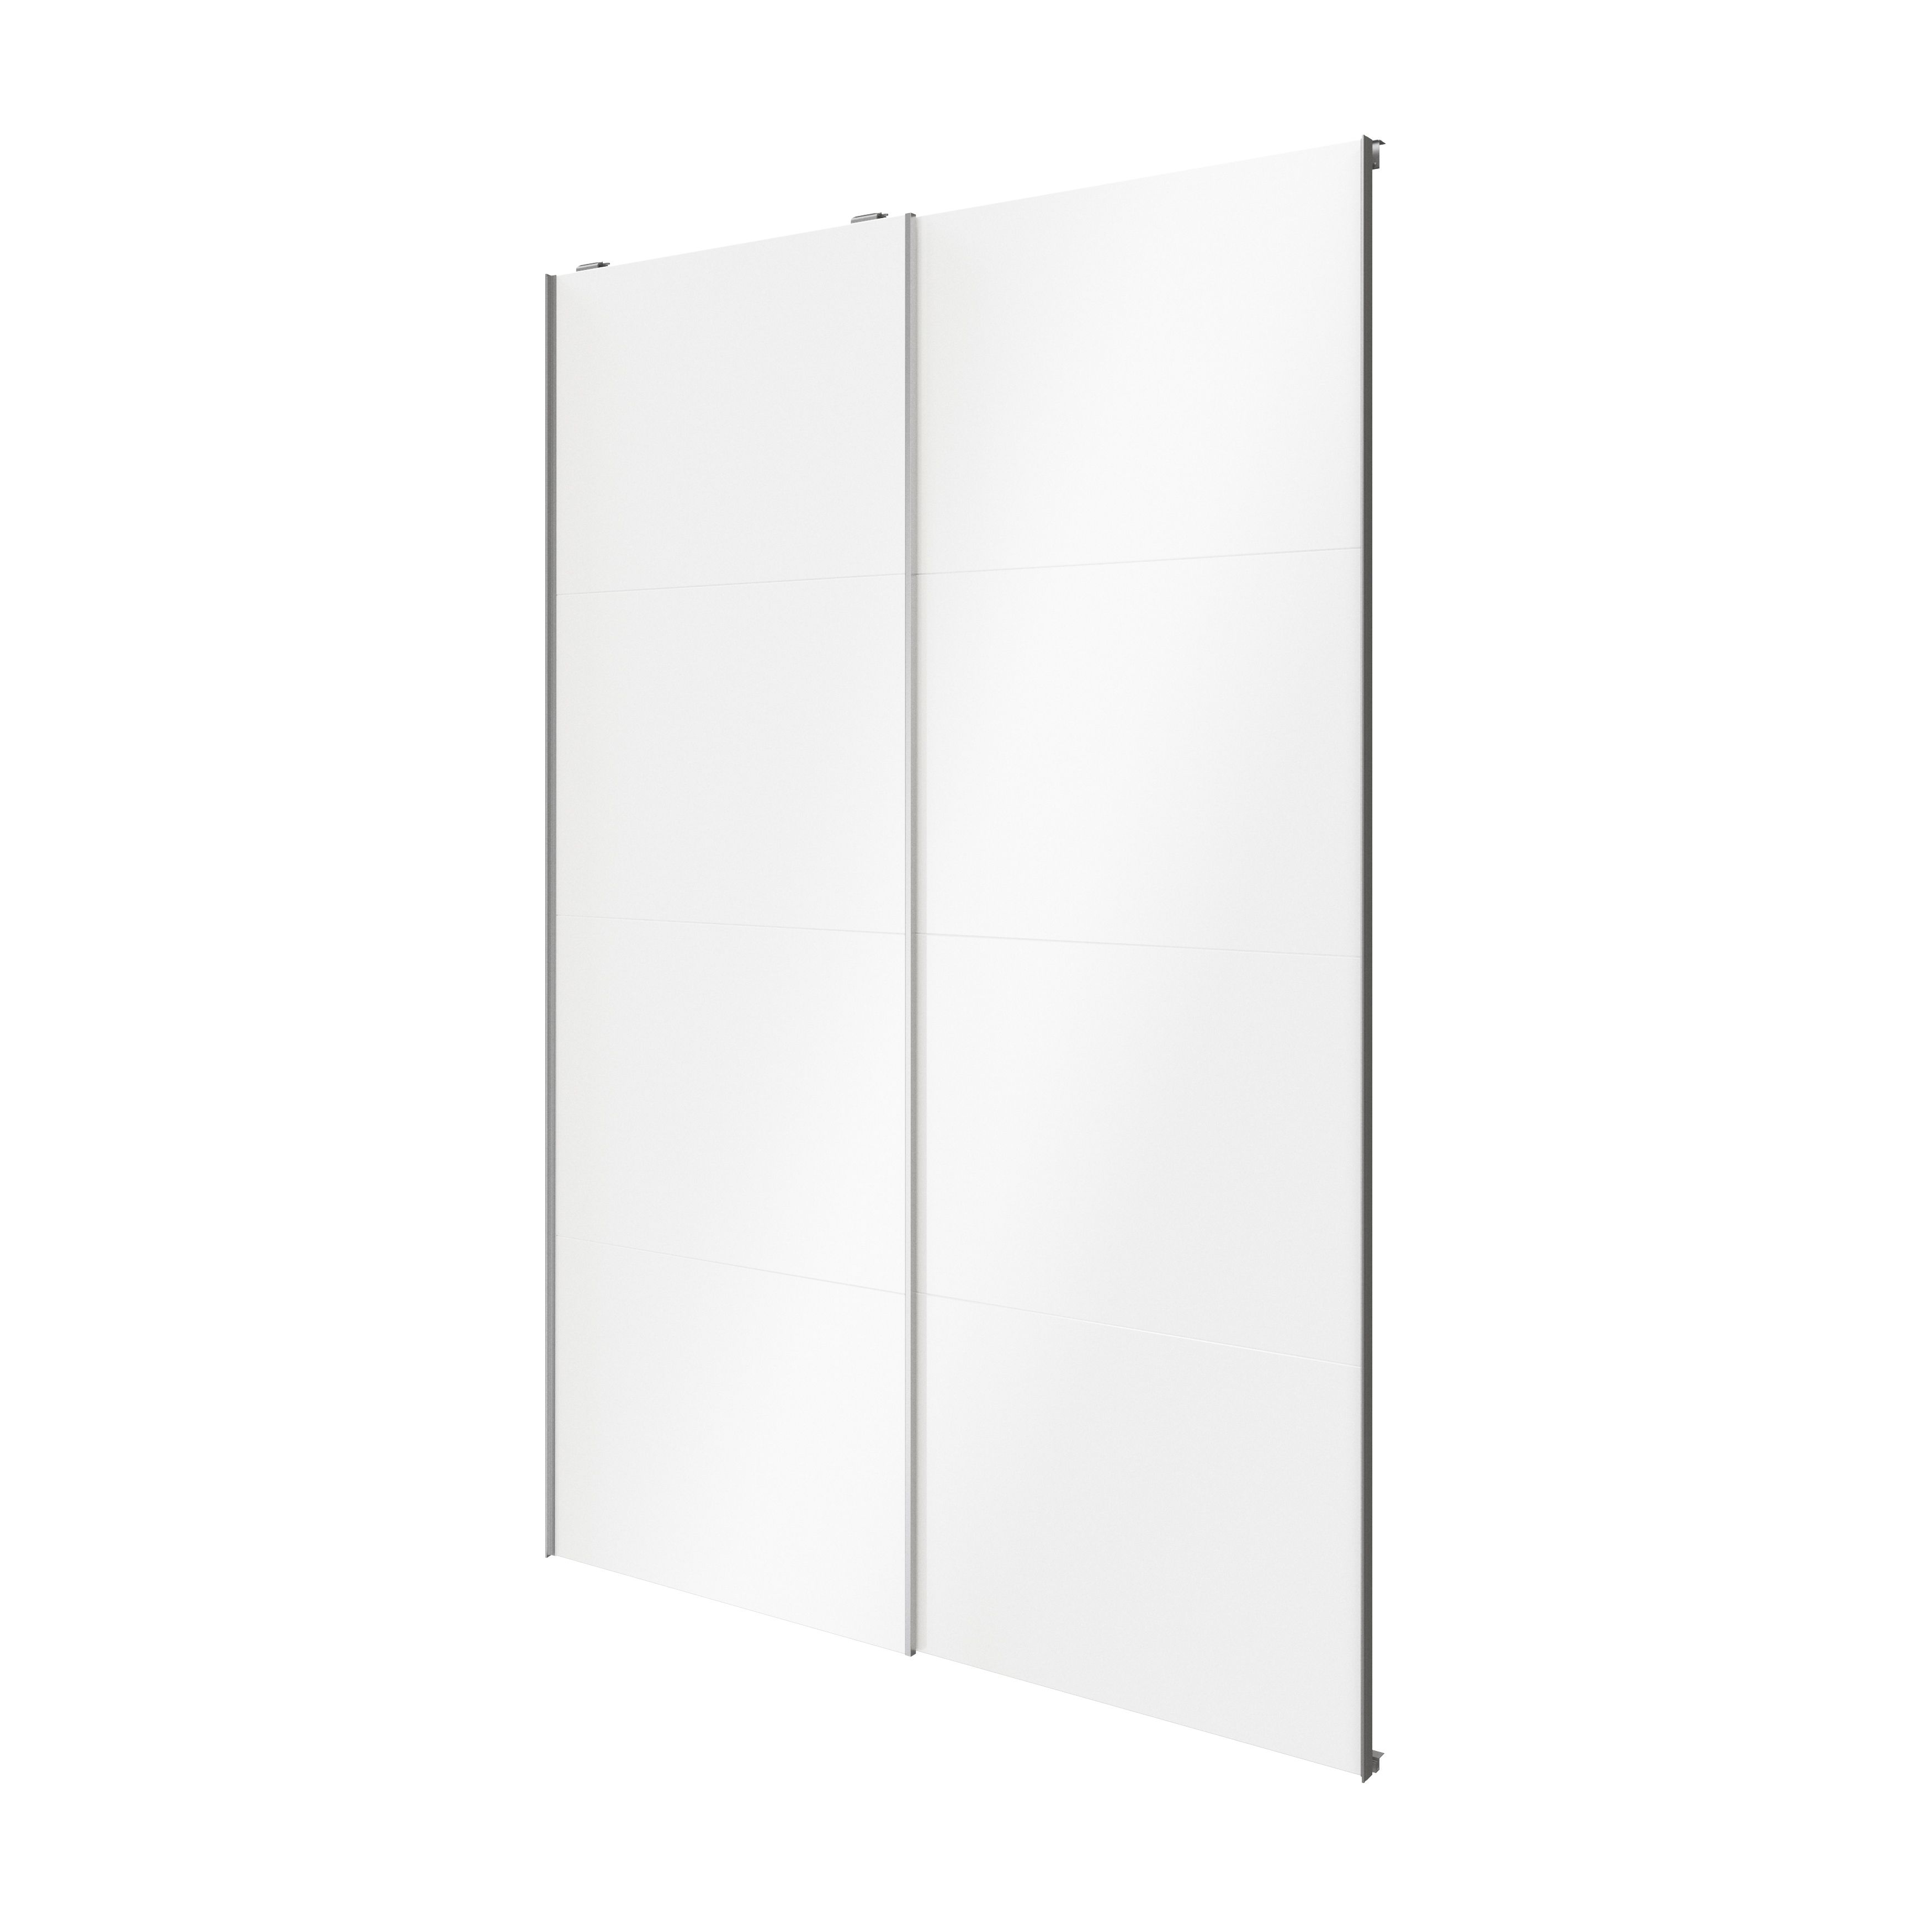 Atomia Panelled White High gloss 2 door Sliding Wardrobe Door kit (H)2250mm (W)1500mm